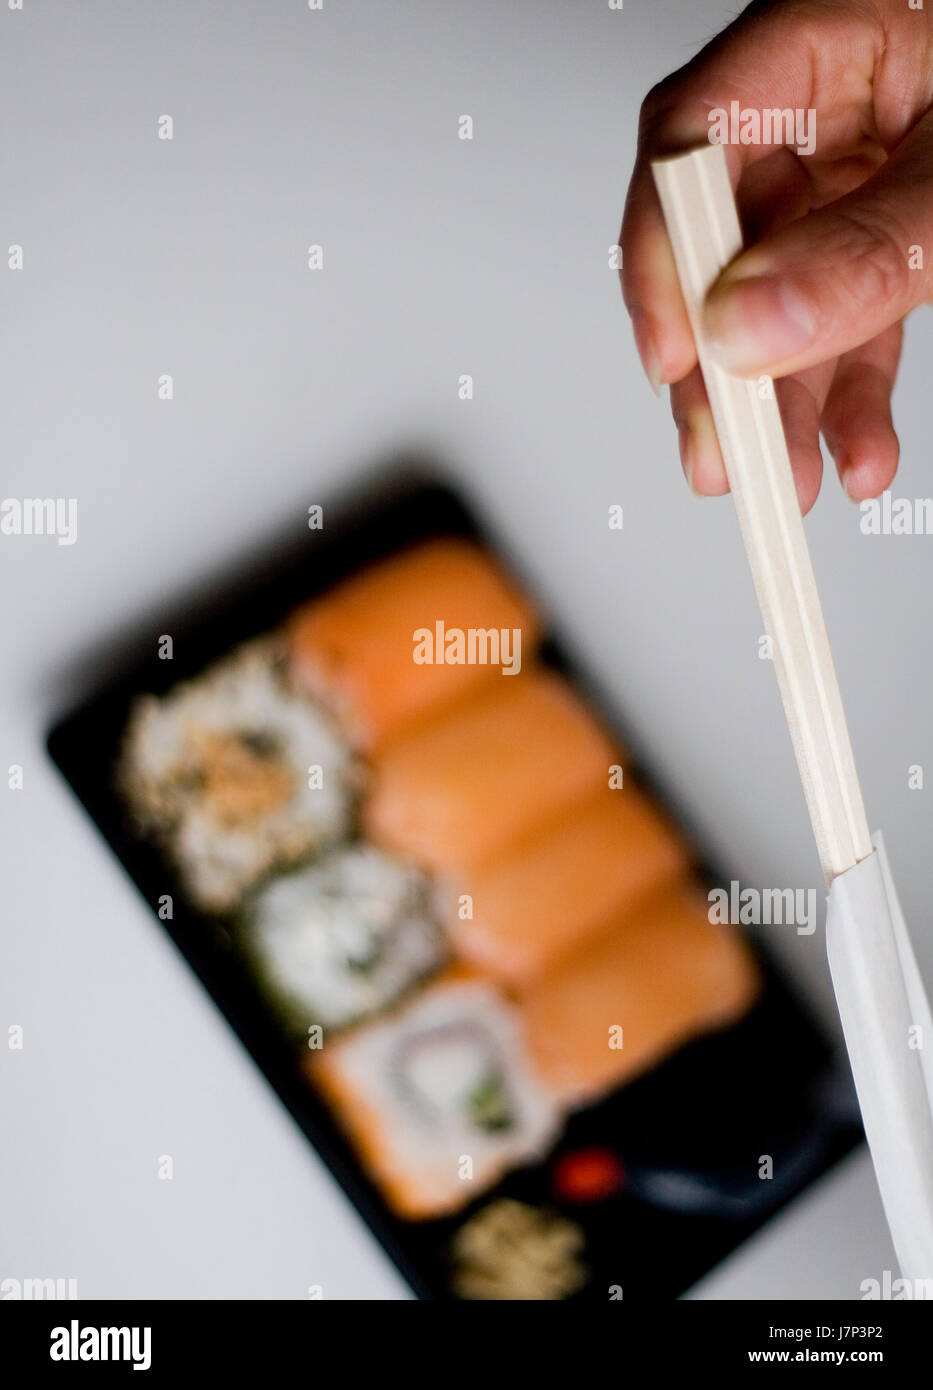 Asia fame pesce sushi giappone stick mangiare mangiare mangia la mano asia fame pranzo di pesce Foto Stock